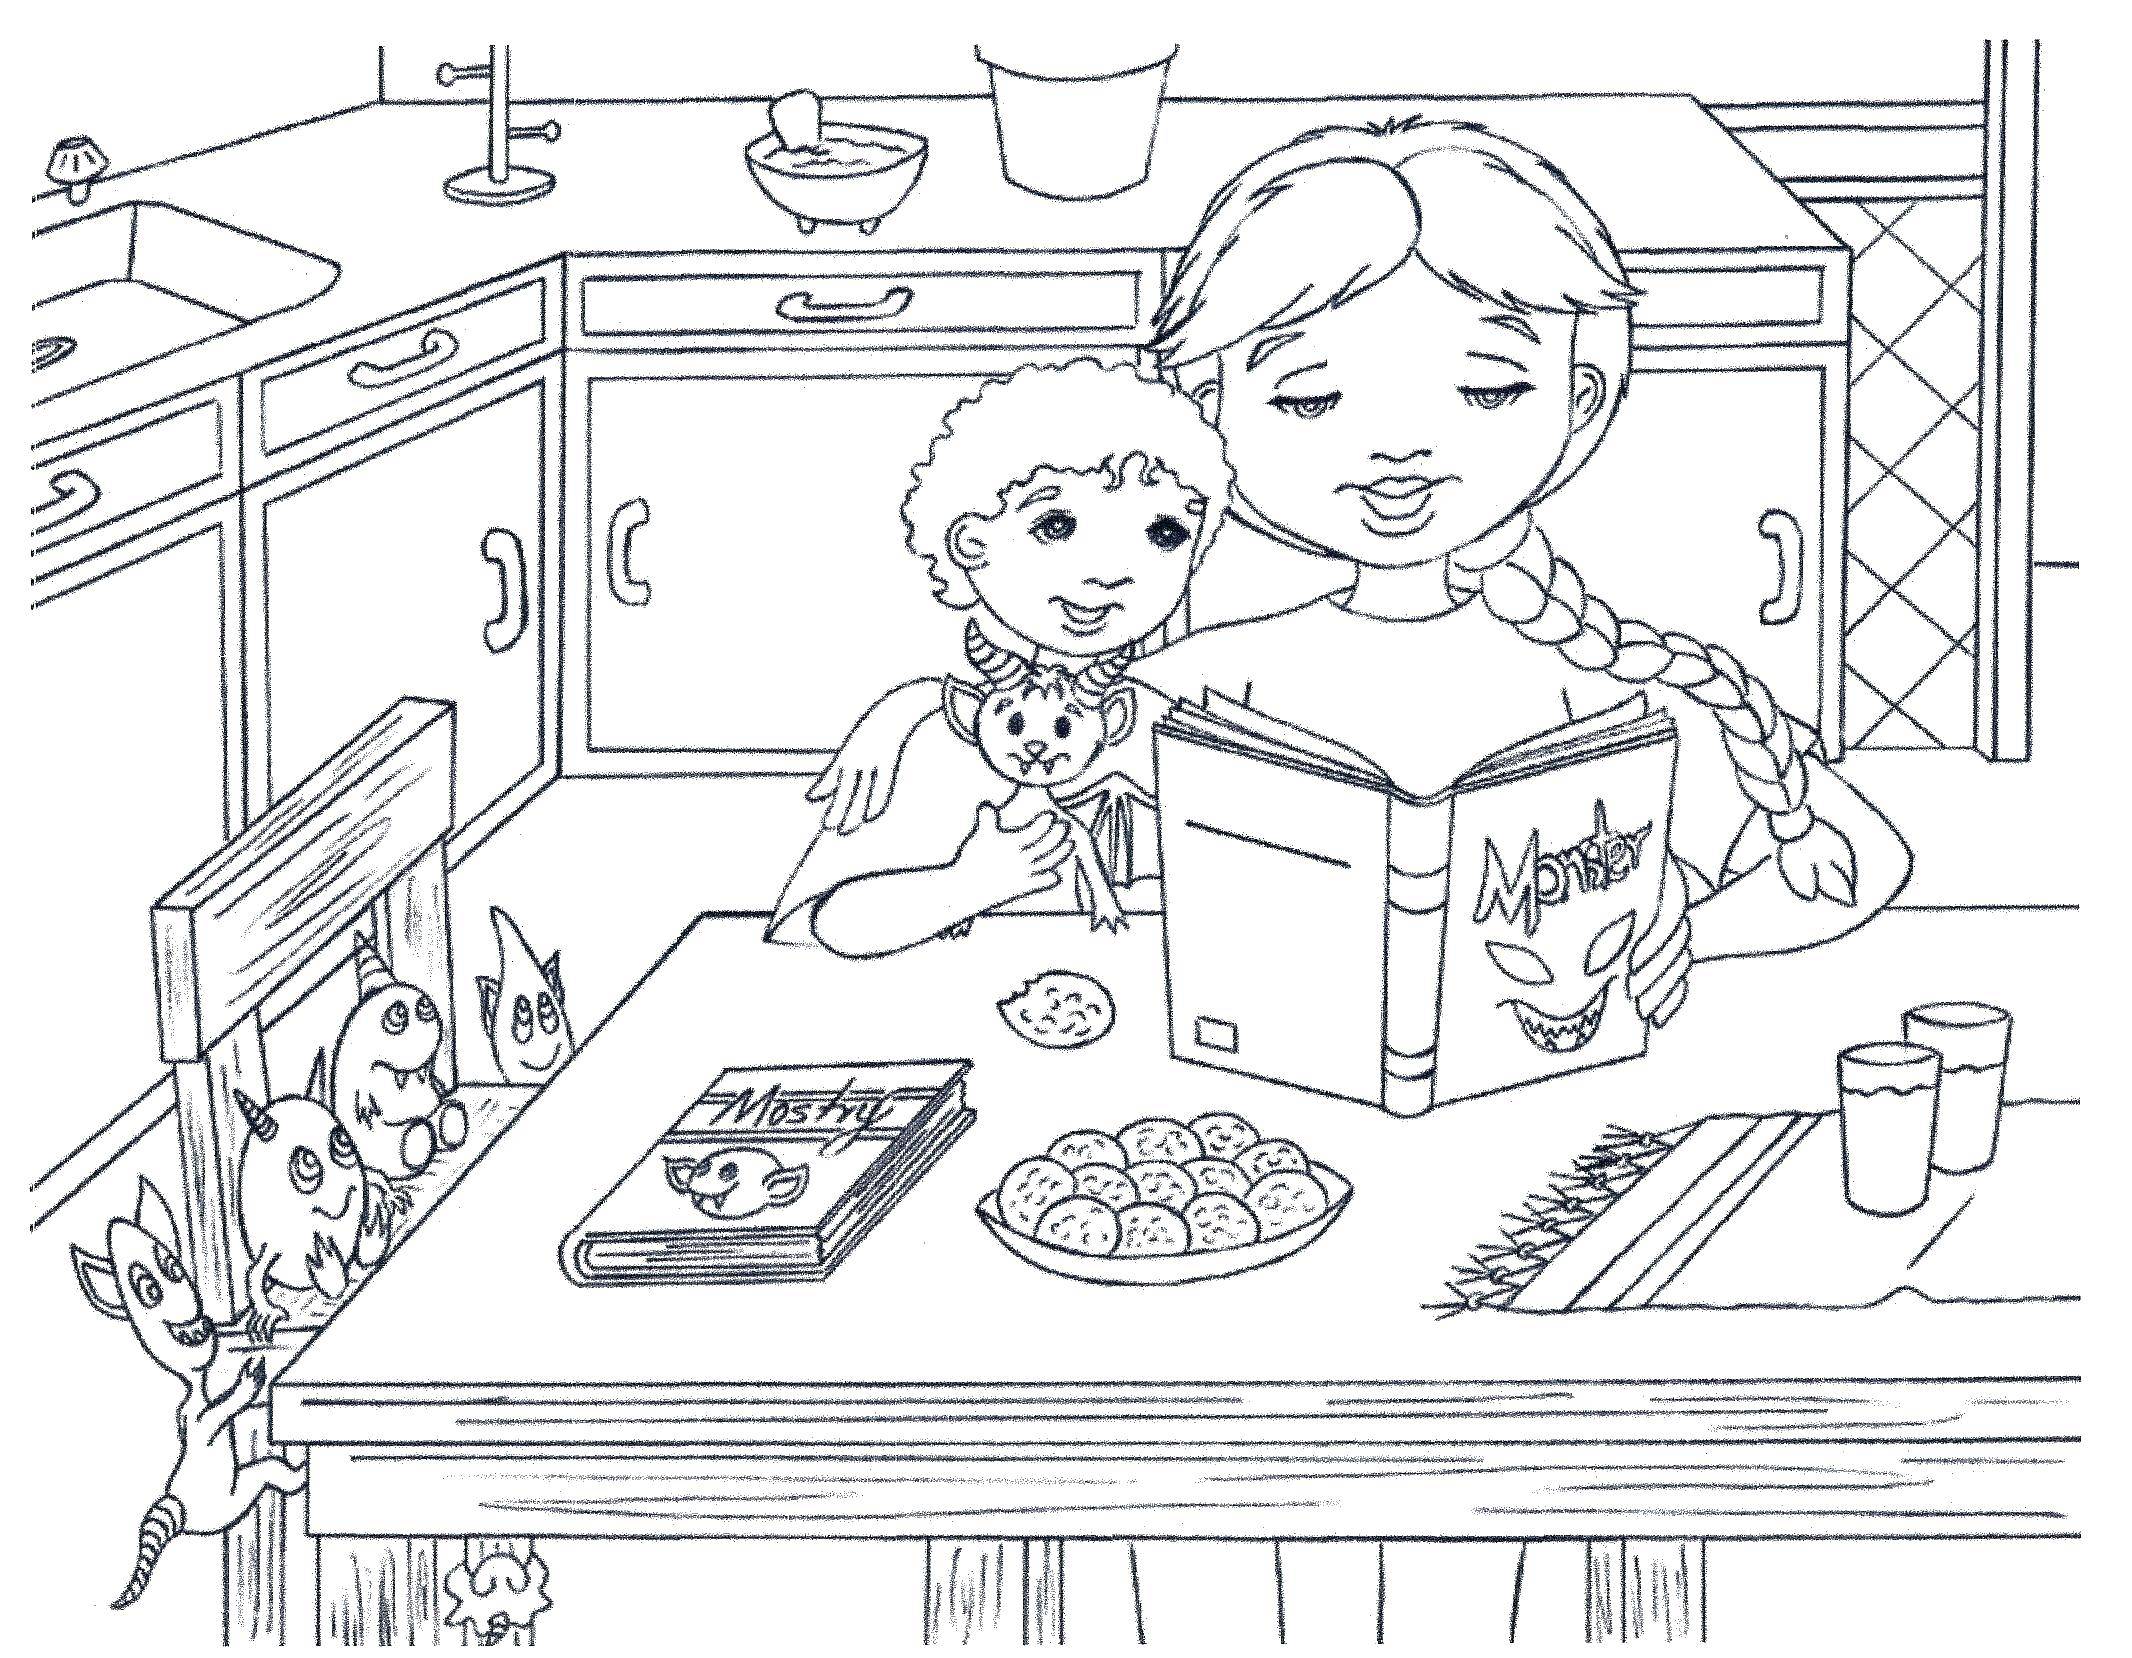 Название: Раскраска Мама читает книгу сыну на кухне. Категория: Кухня. Теги: кухня, книга.